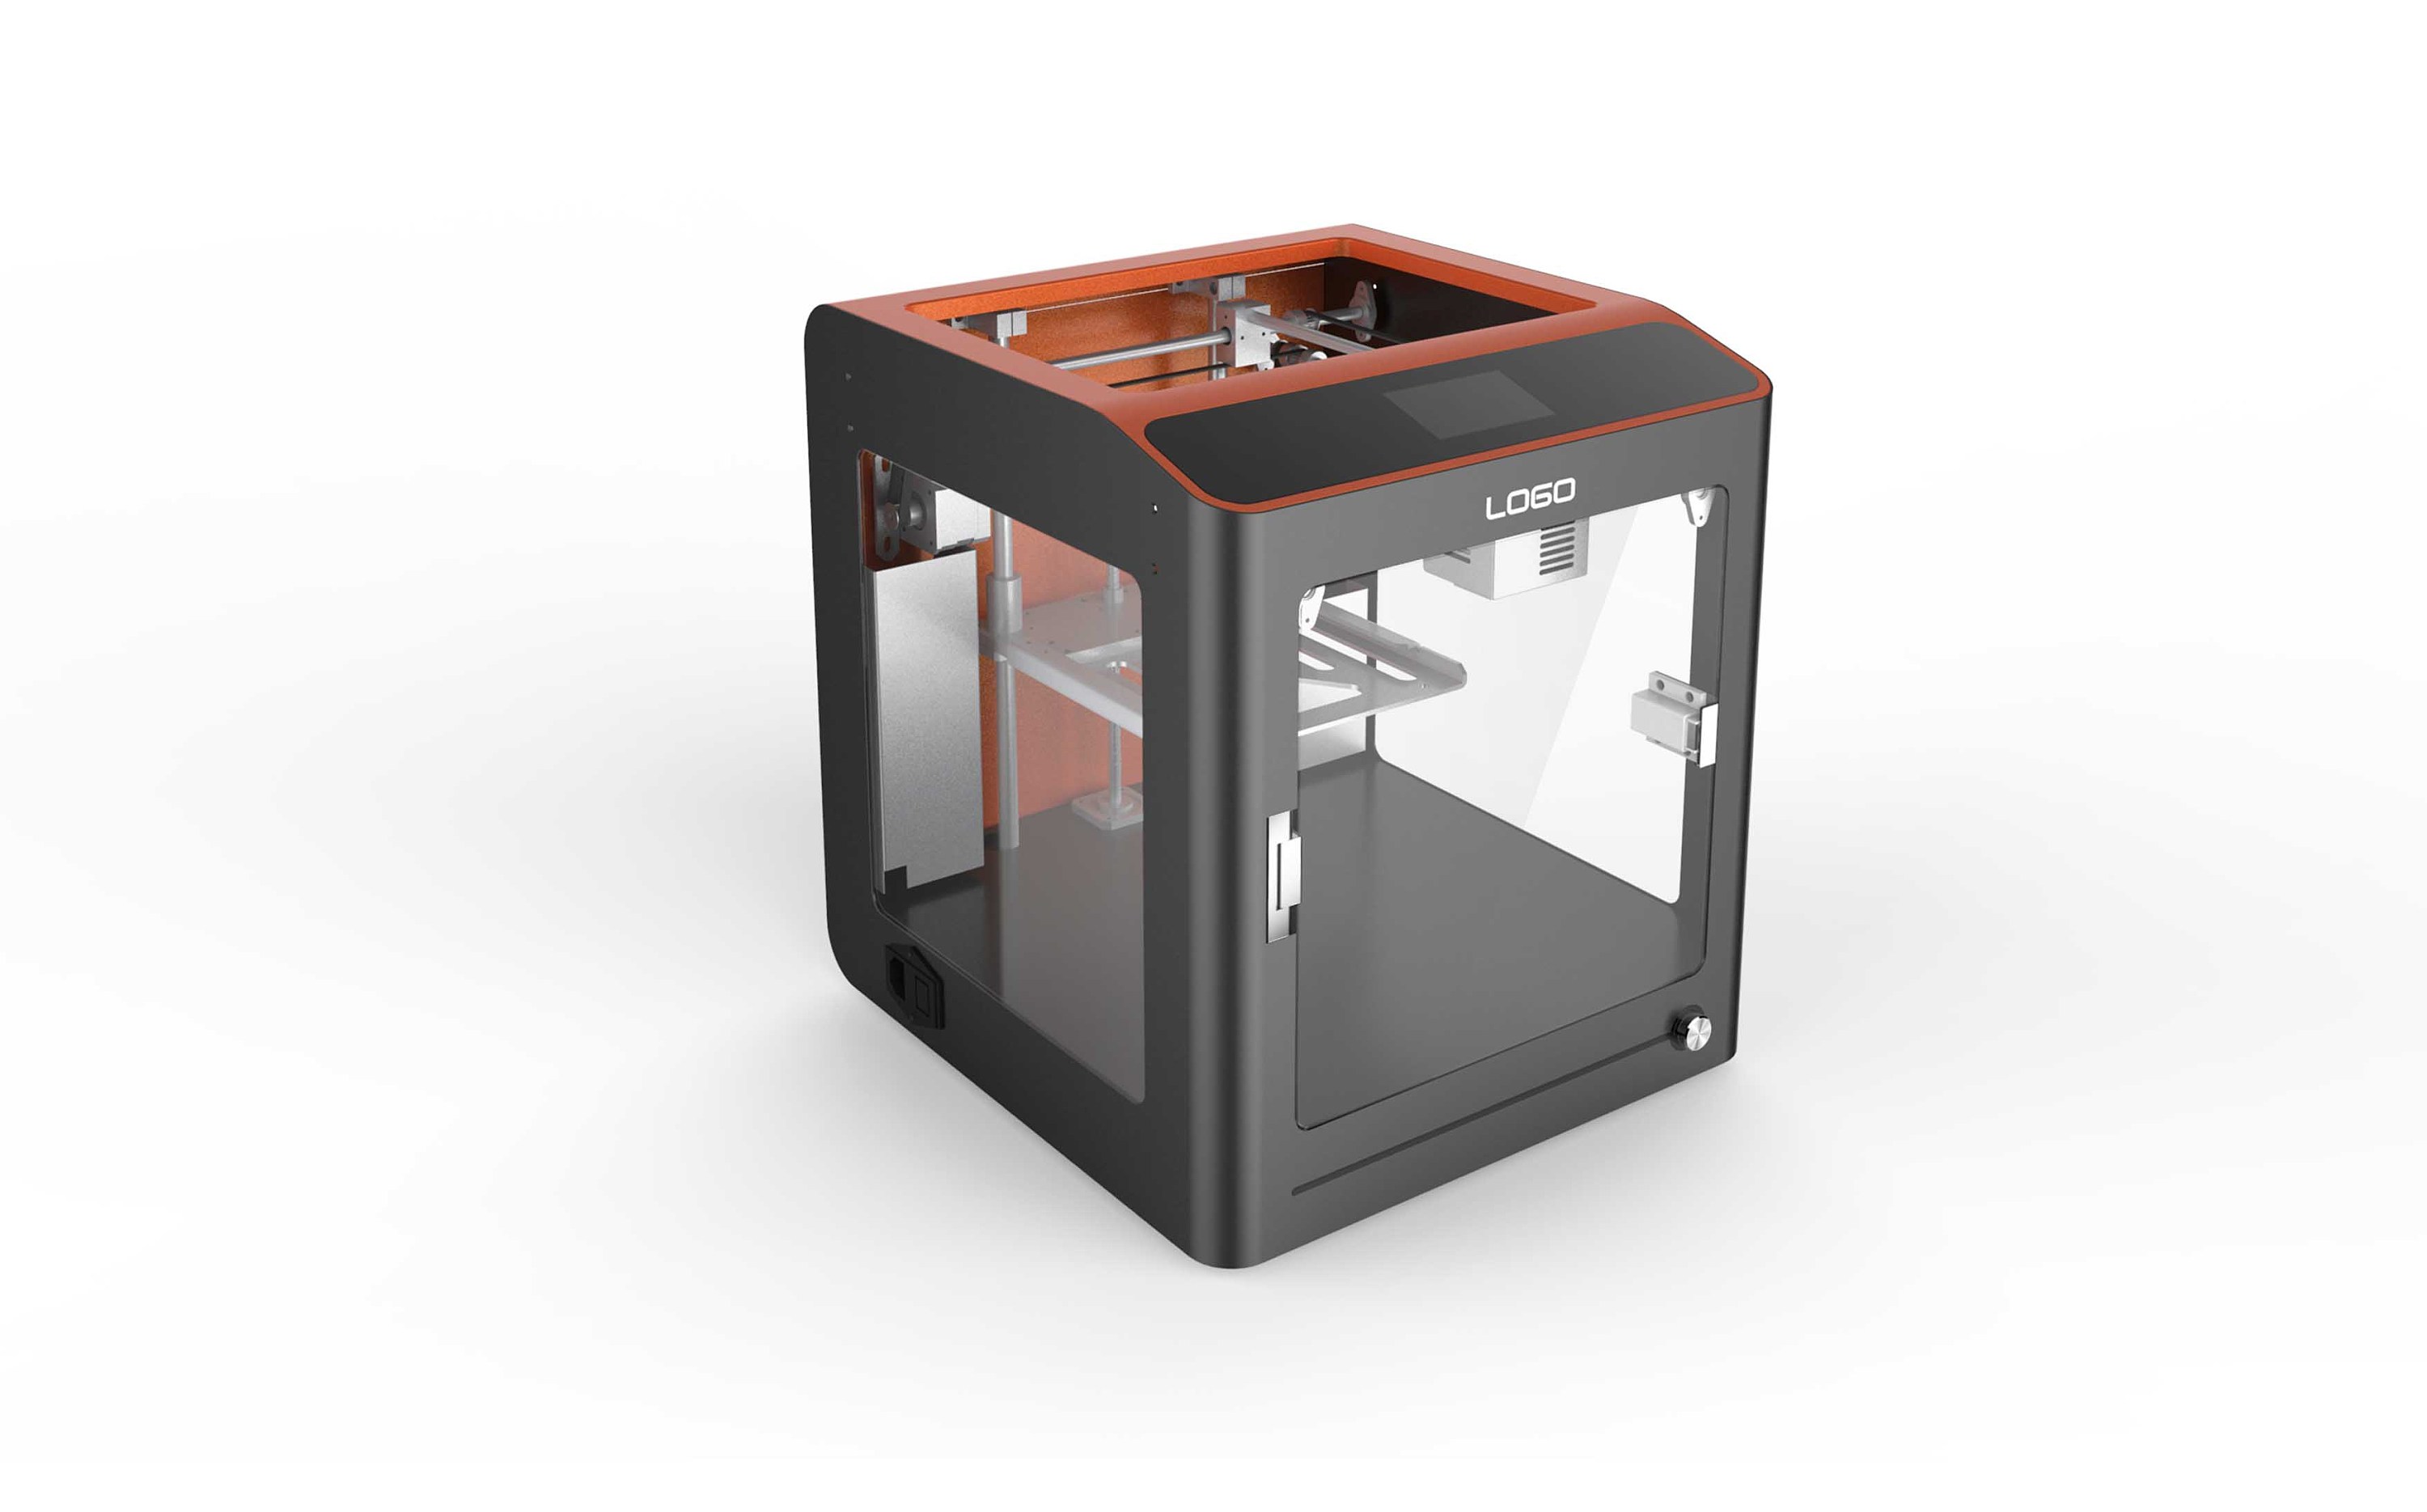 【工程机械】air2 3D打印机结构3D图纸 Solidworks设计 附IGS_SolidWorks-仿真秀干货文章